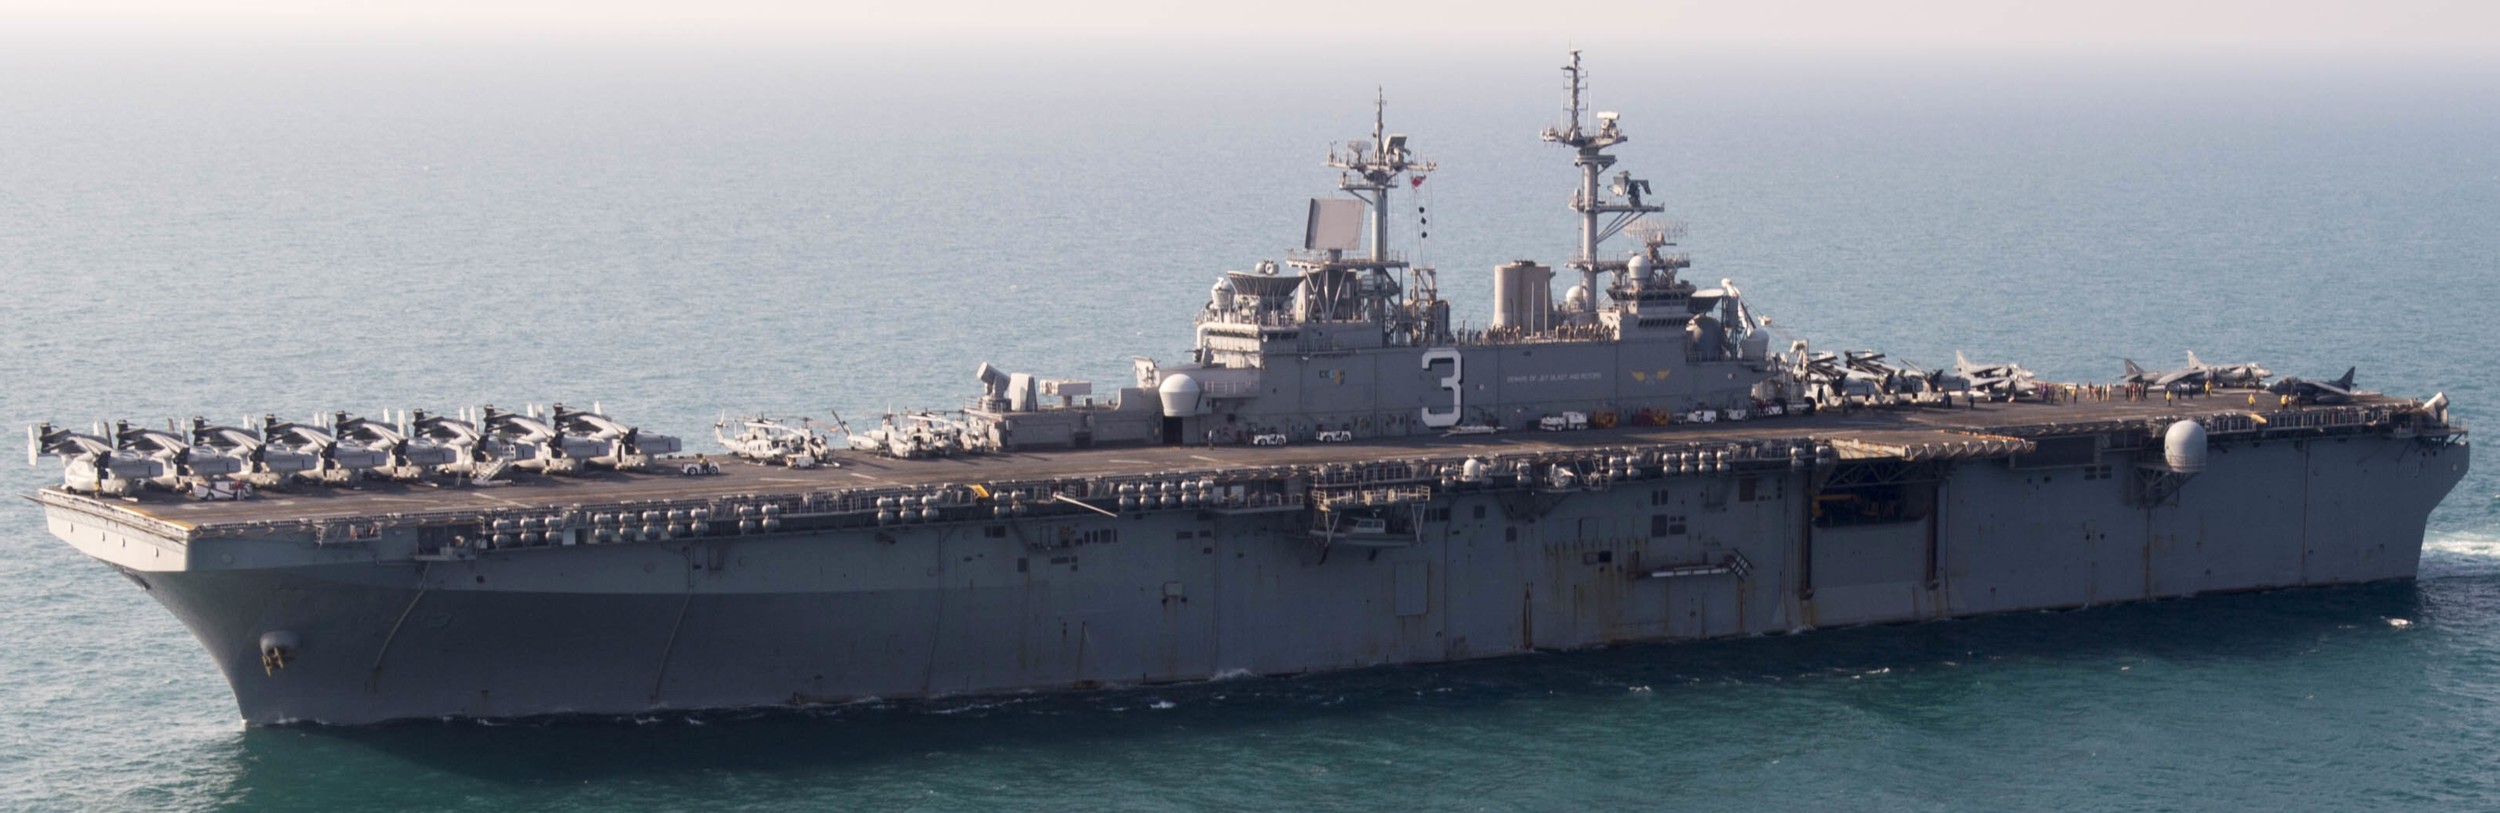 lhd-3 uss kearsarge wasp class amphibious assault ship us navy marines vmm-162 arabian gulf 162